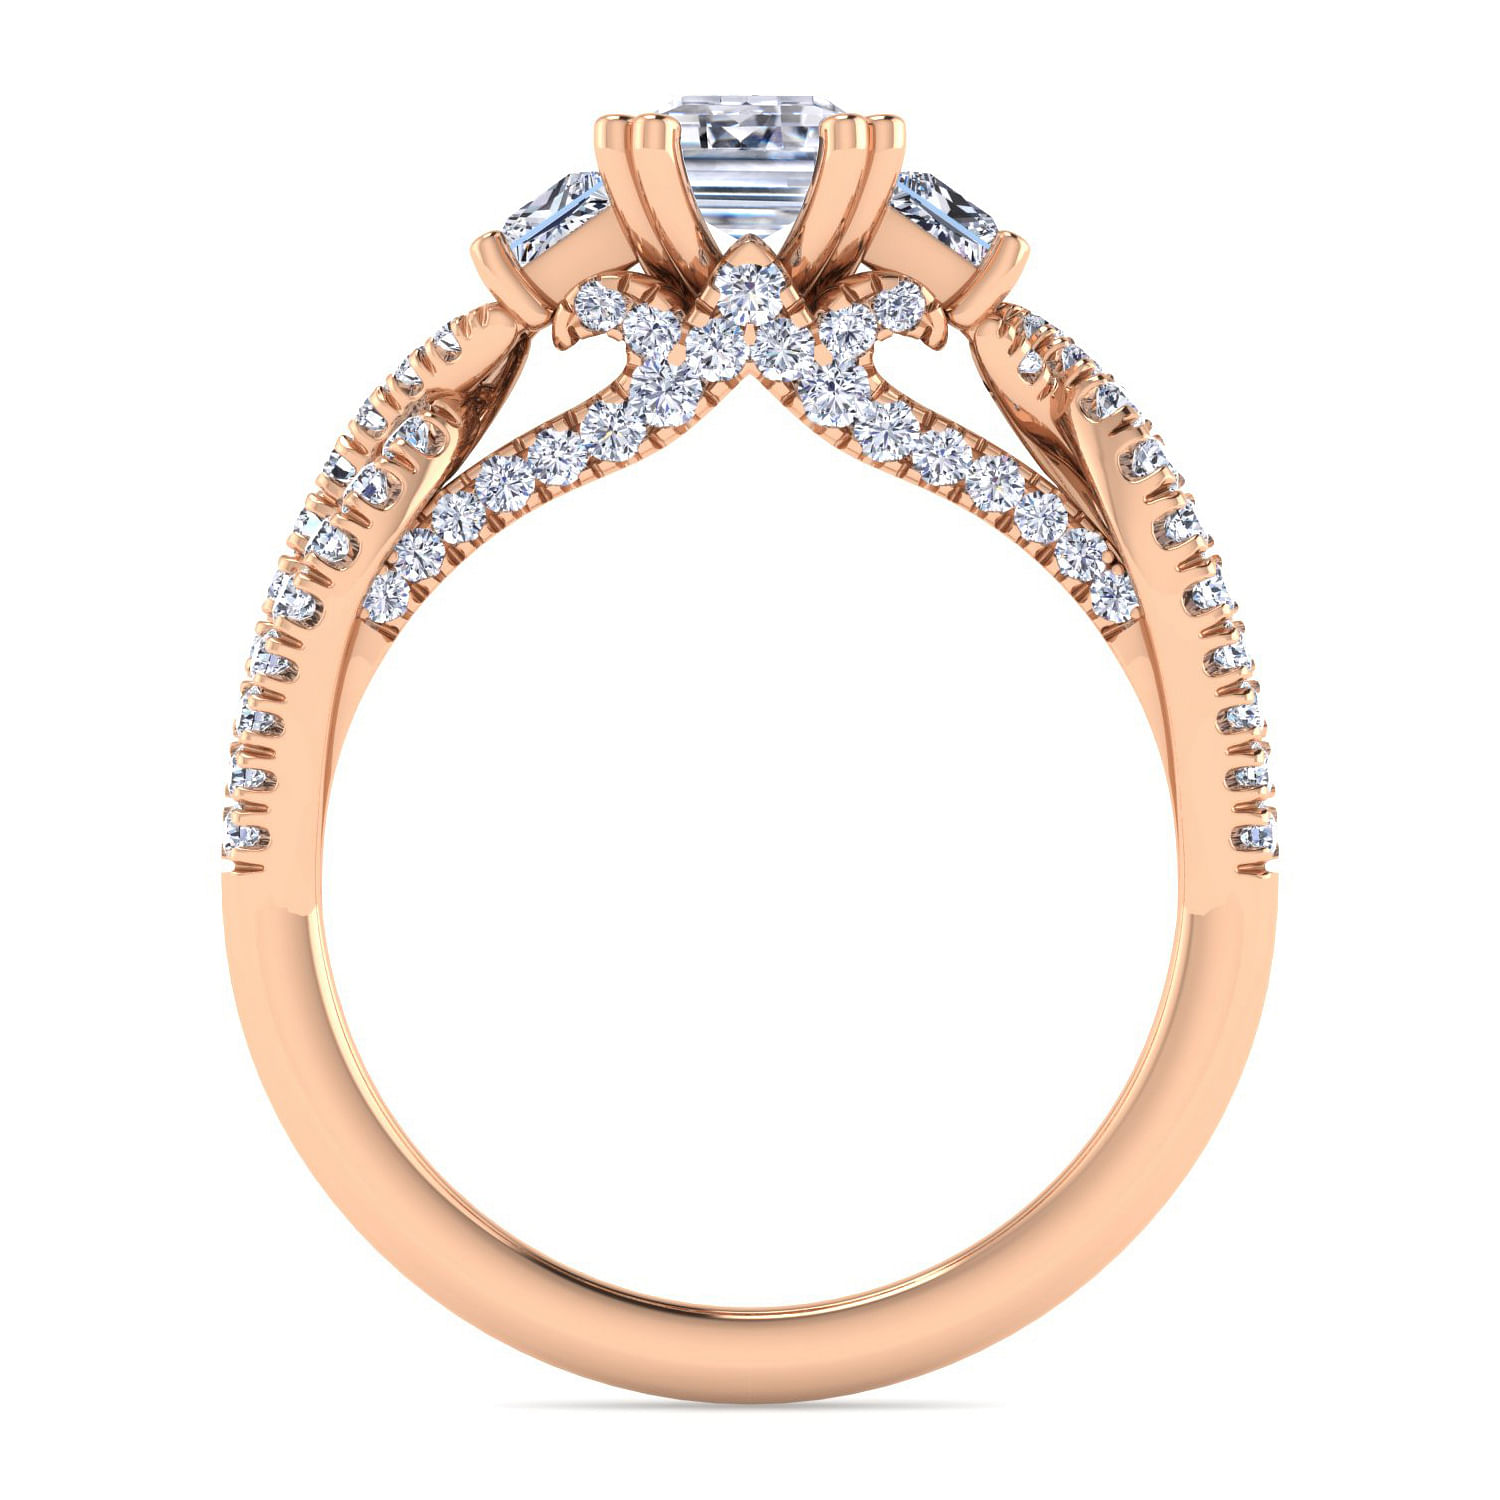 14K Rose Gold Emerald Cut Diamond Engagement Ring